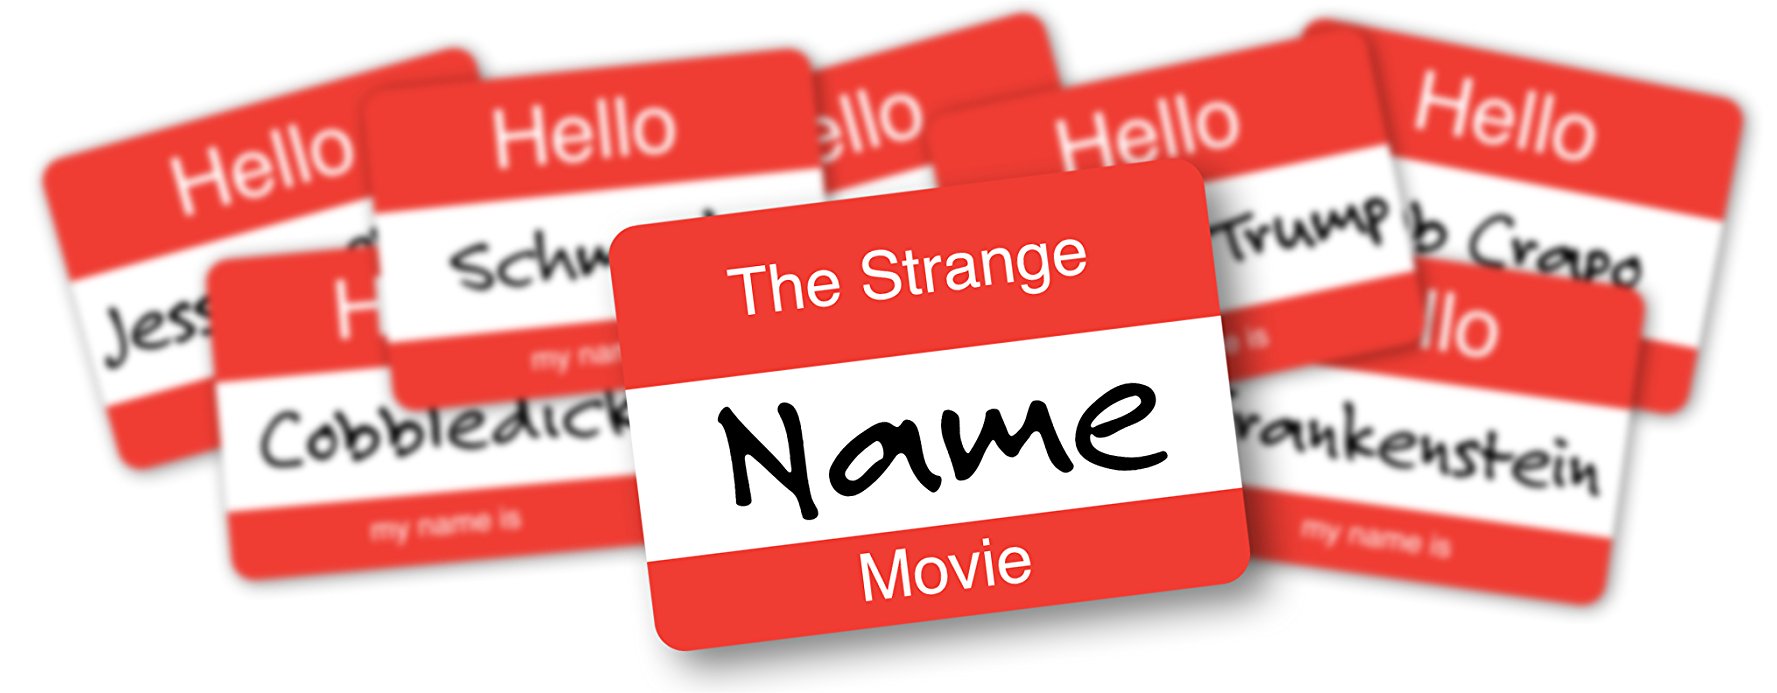 Watch The Strange Name Movie